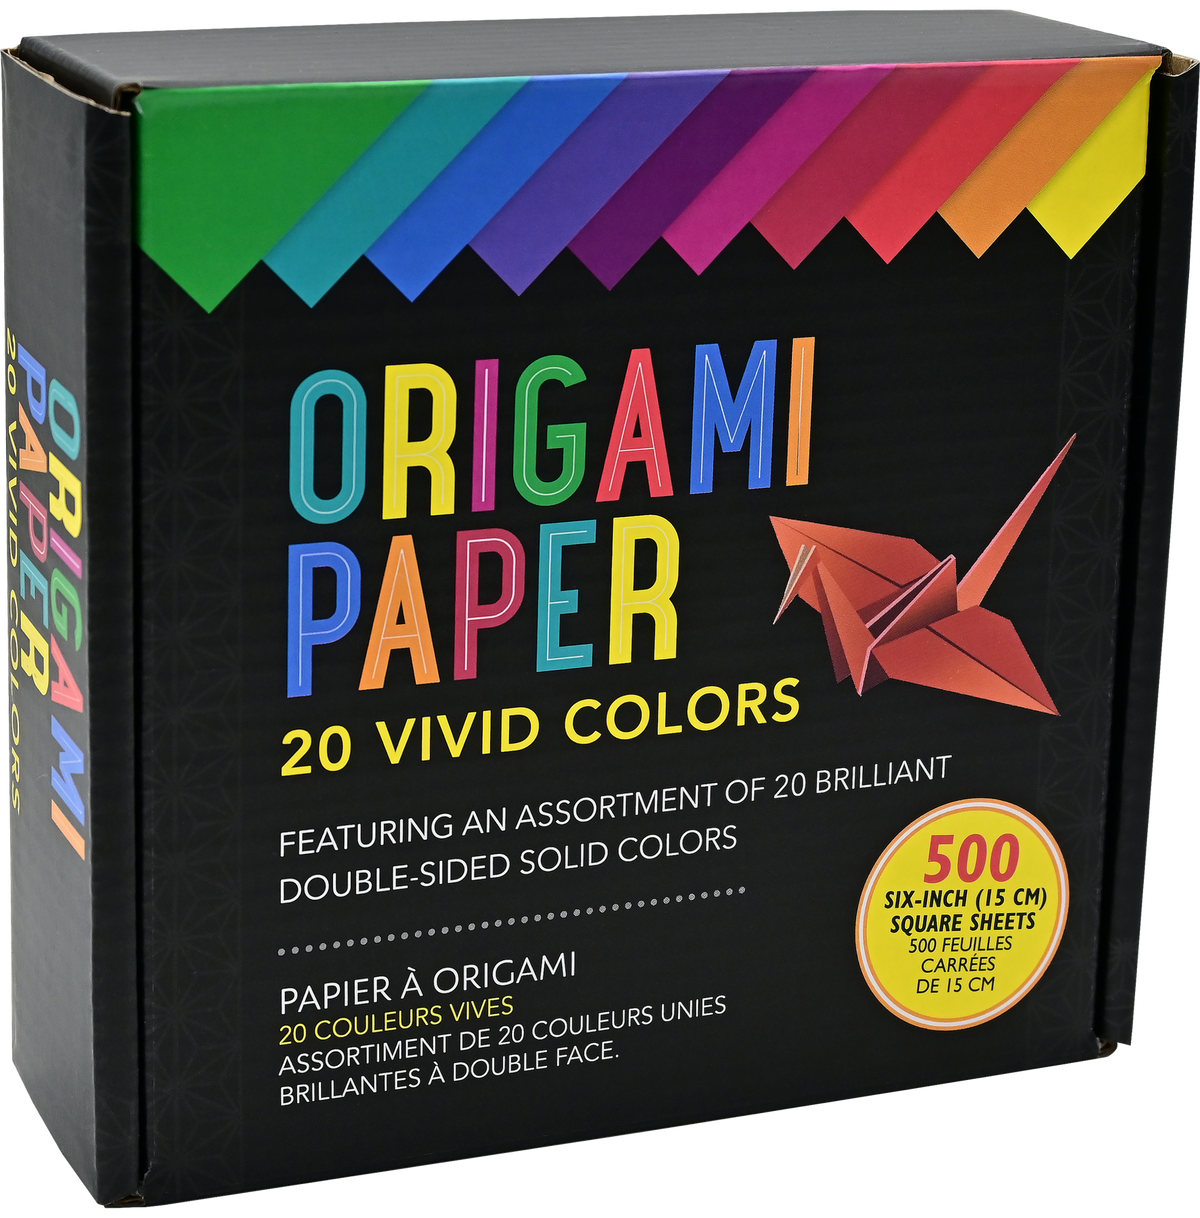 Peter Pauper Origami Paper 20 Vivid Colors